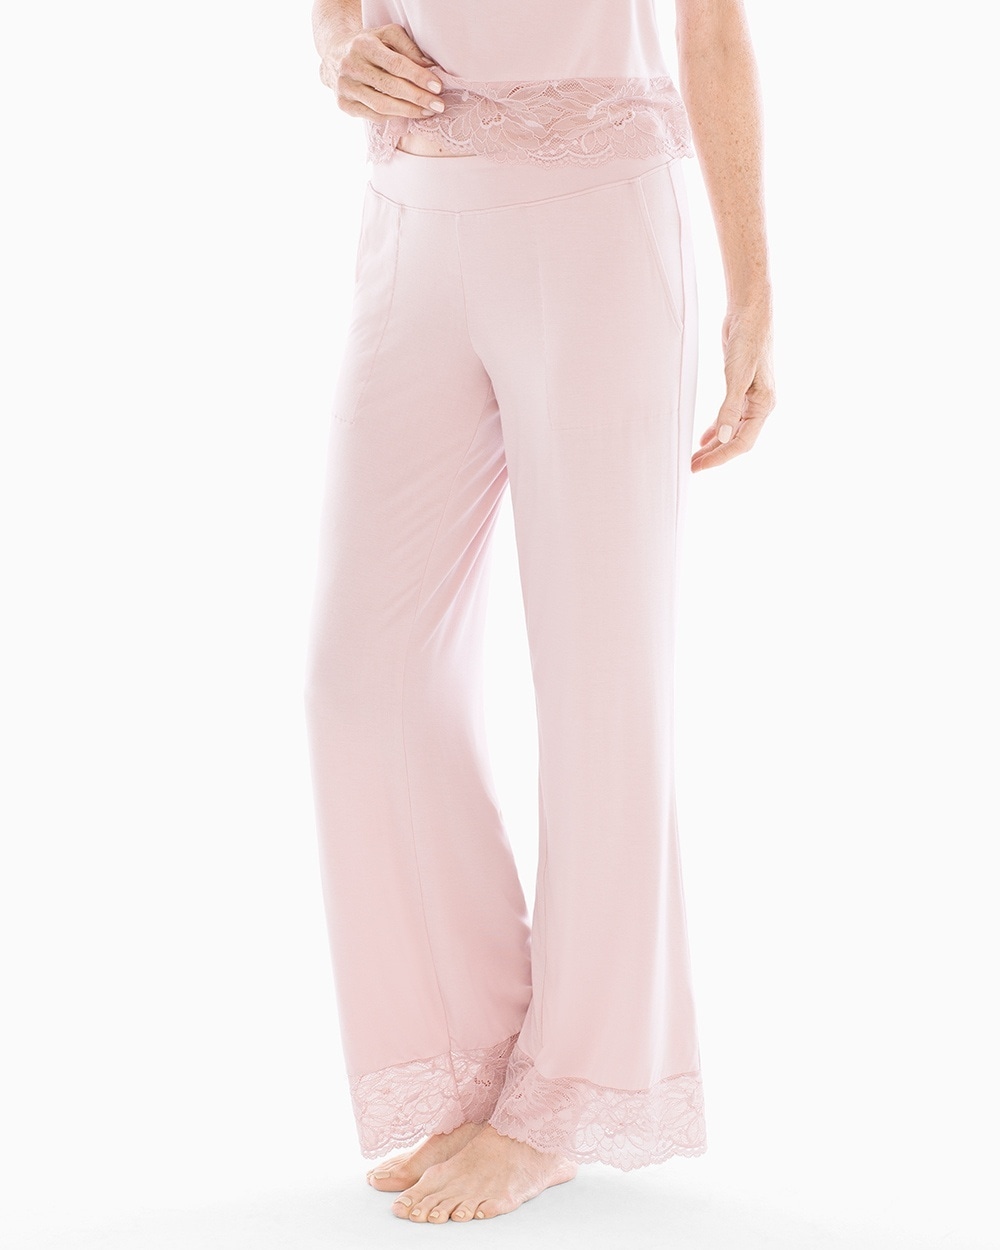 Cool Nights Lace Trim Pajama Pants Vintage Pink